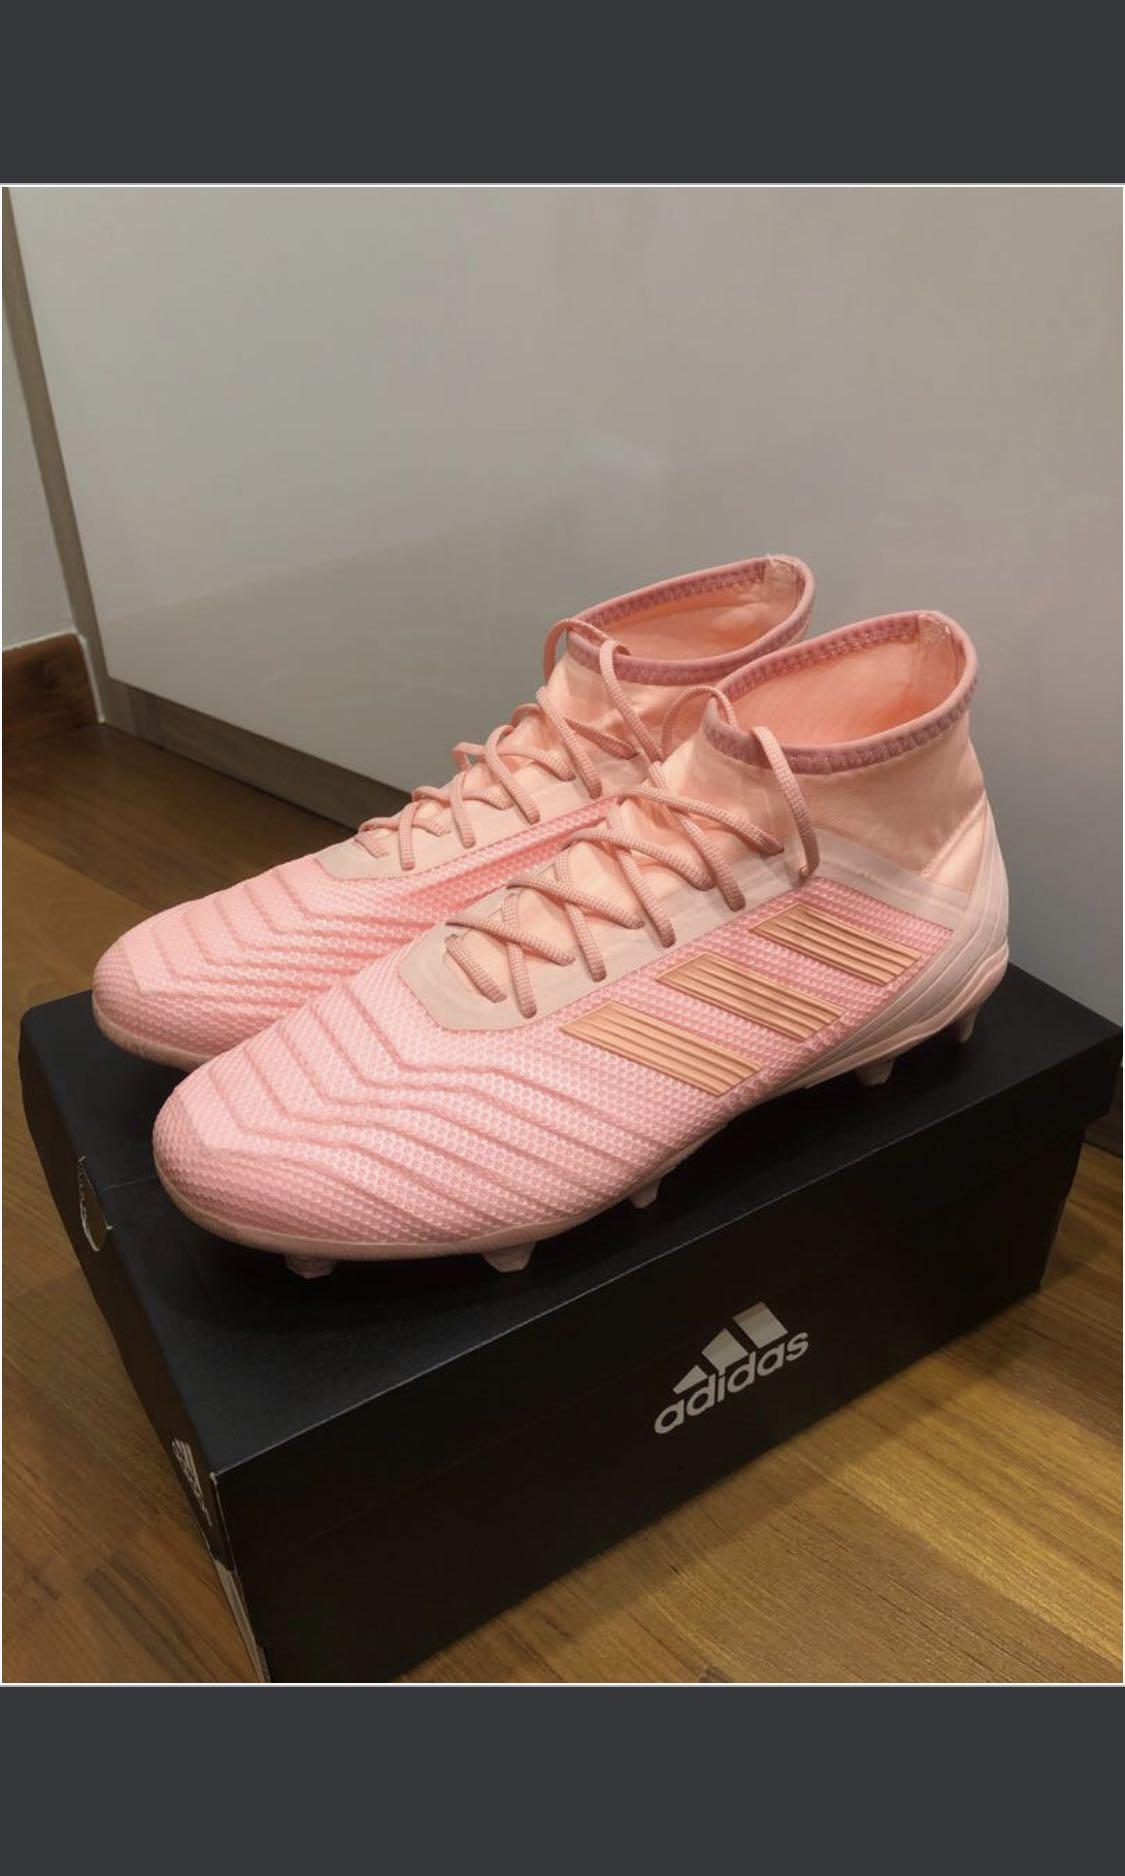 adidas predator 18.2 fg pink